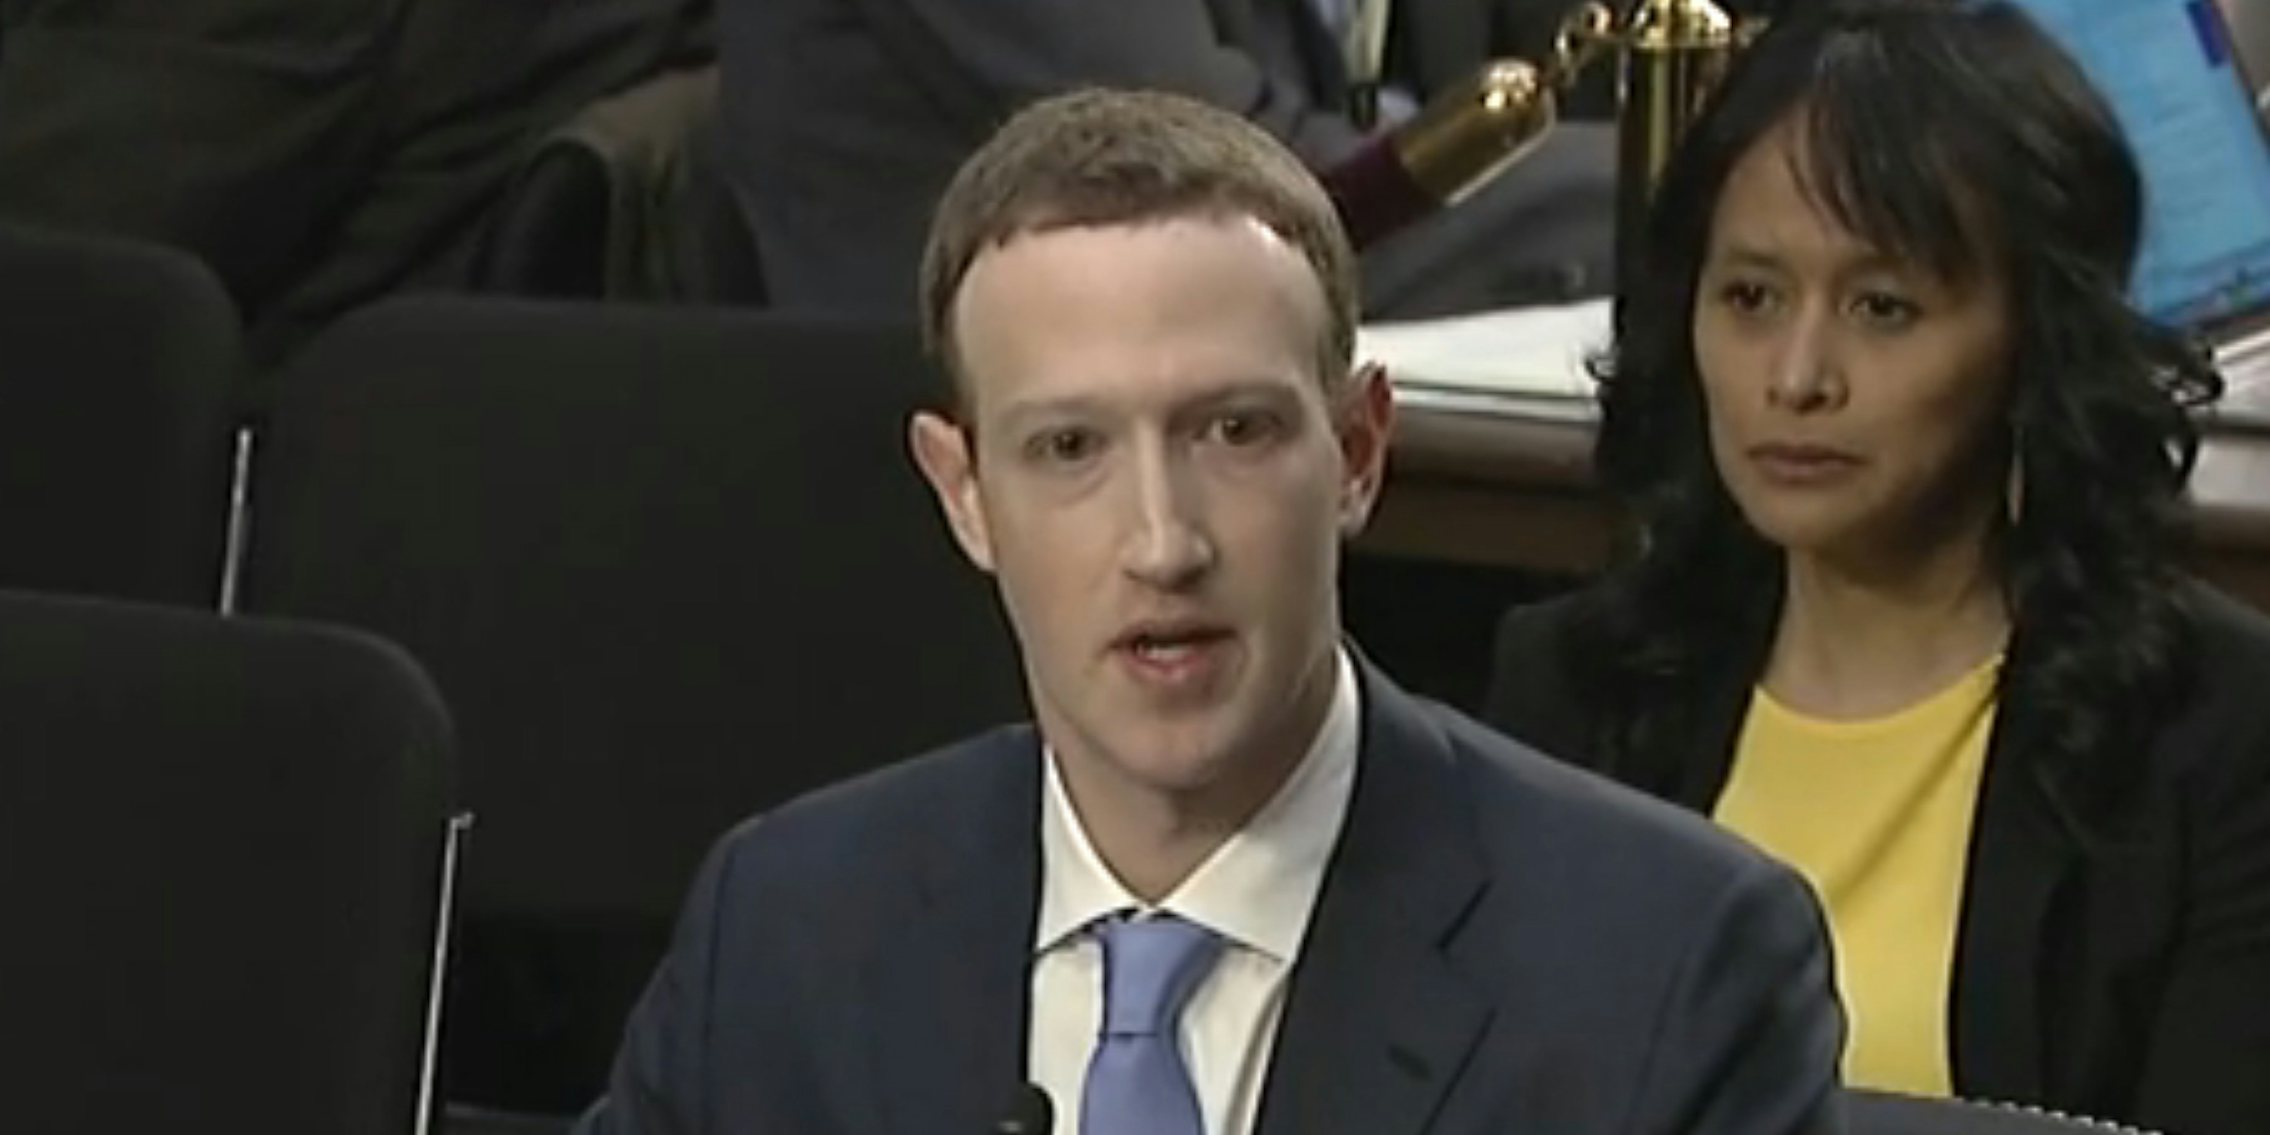 Facebook CEO Mark Zuckerberg testified before the Senate Judiciary Committee on Tuesday.